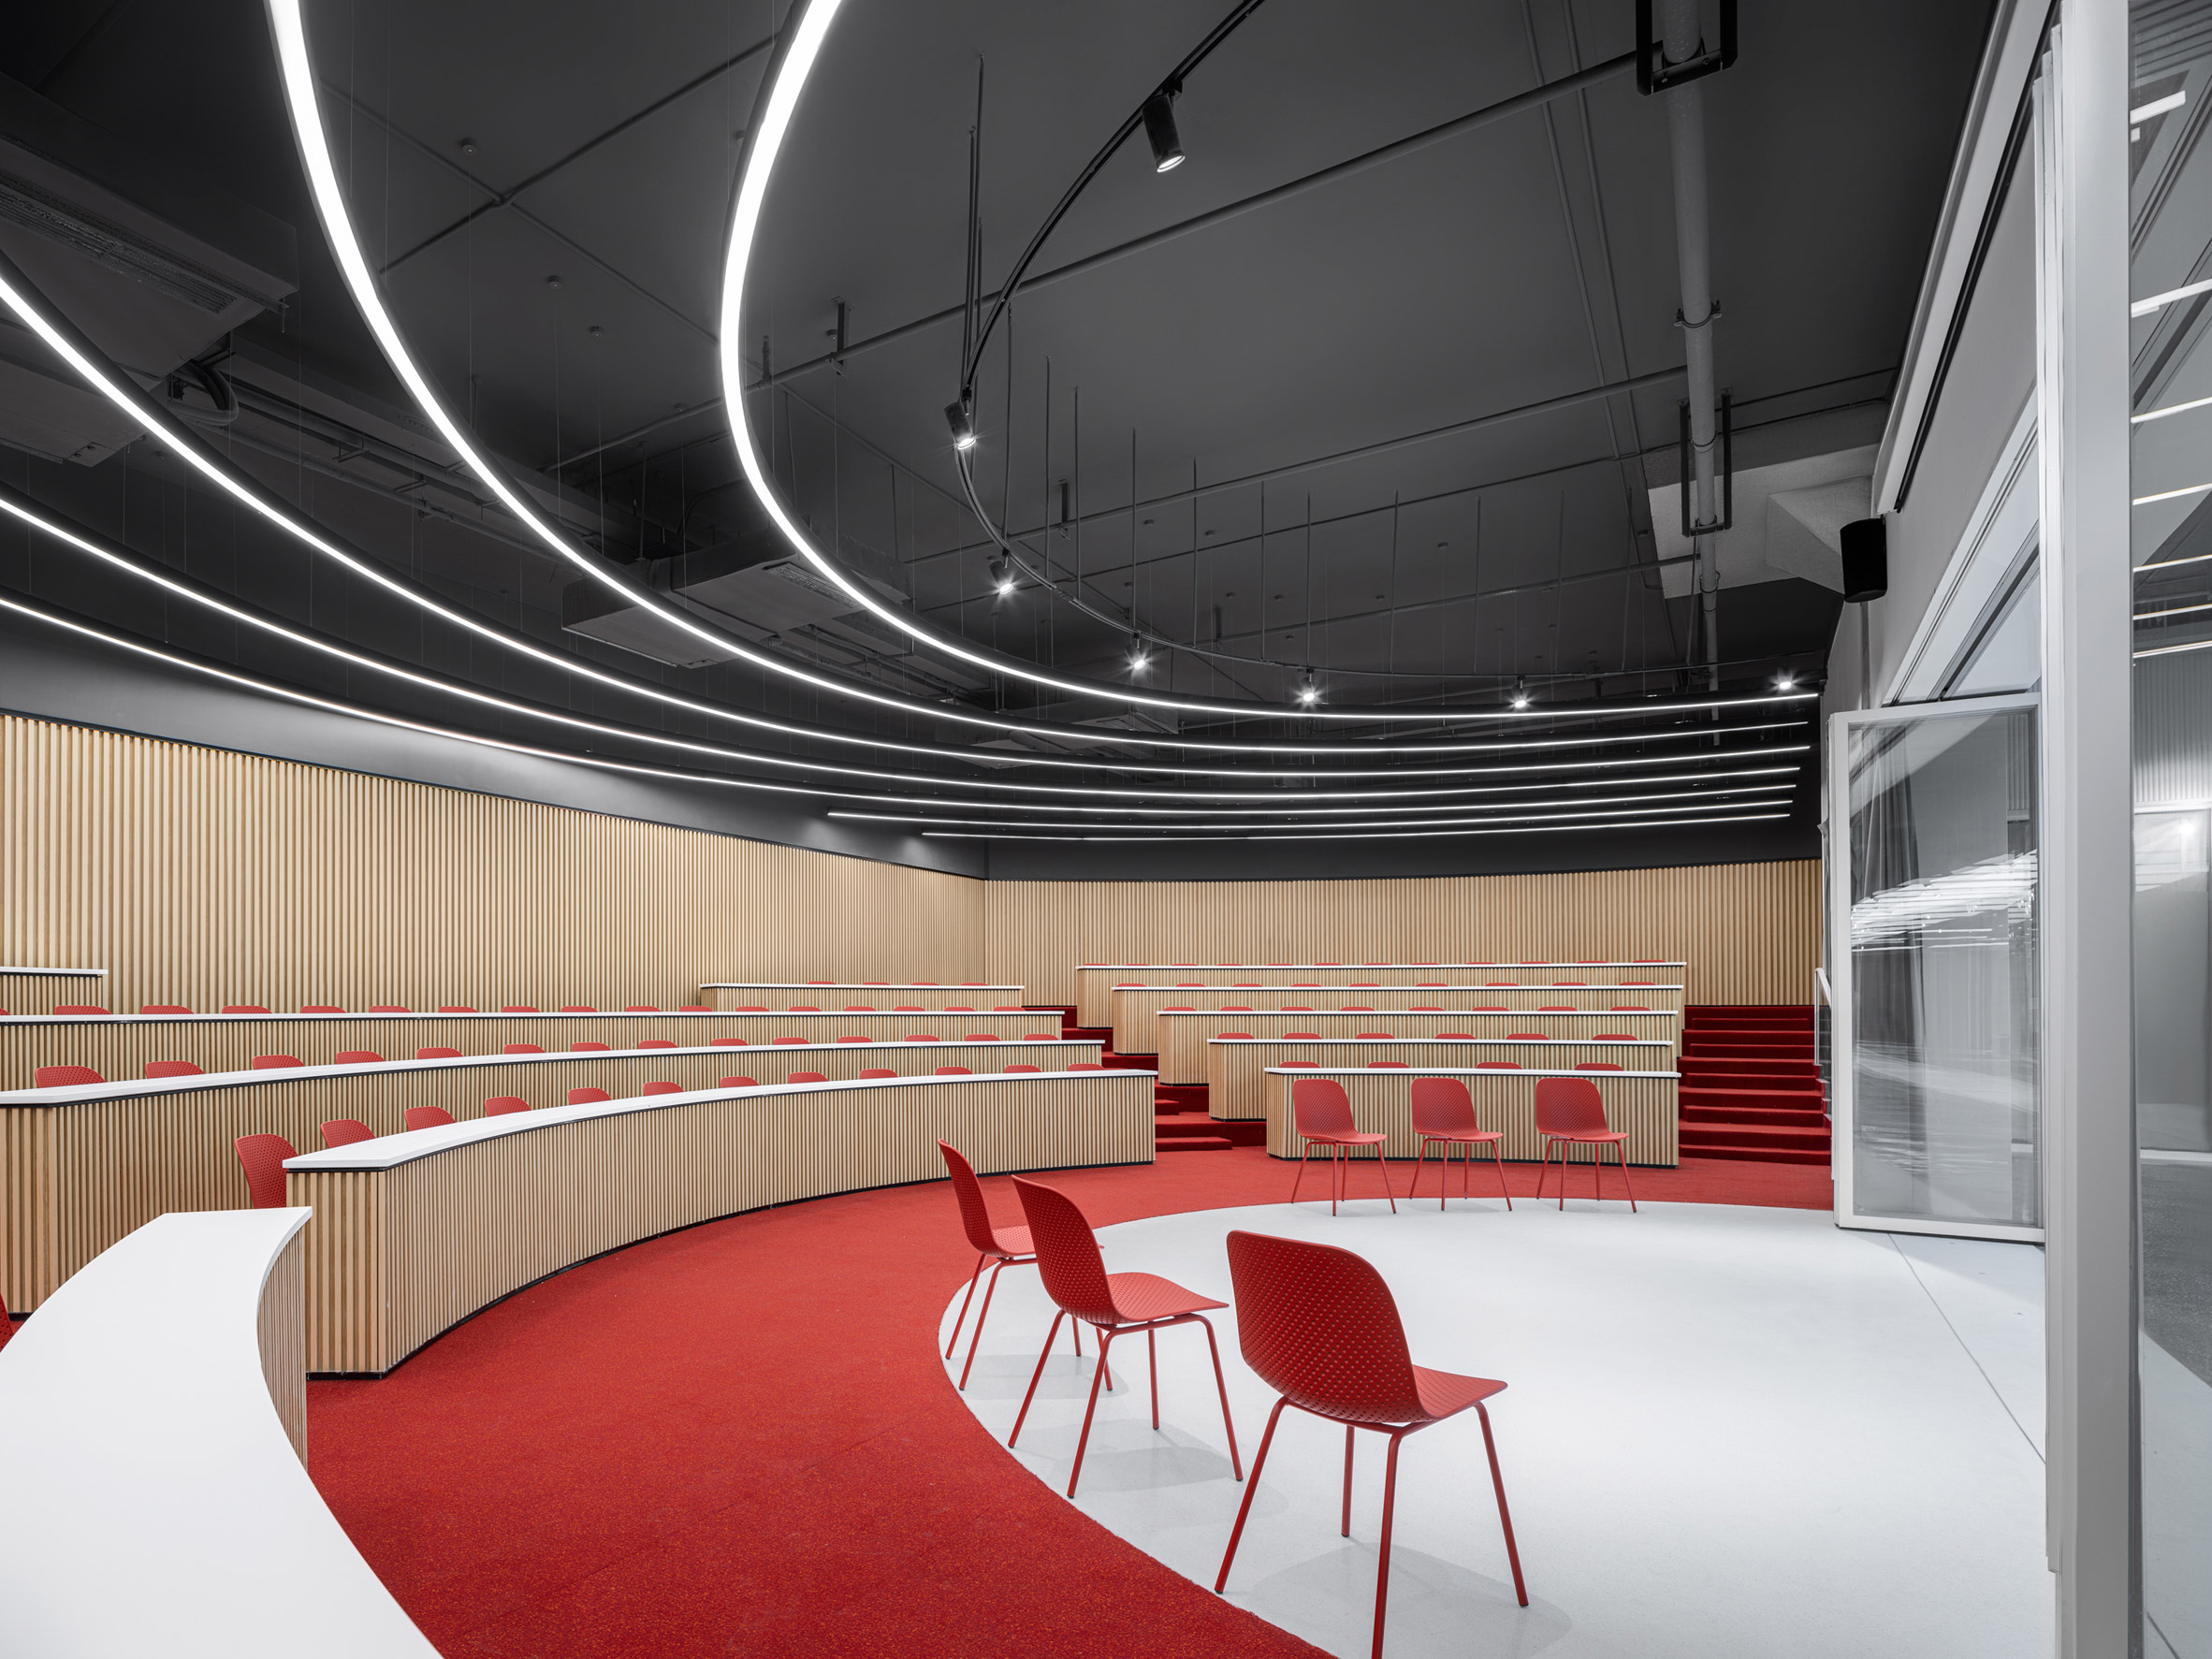 Interior image of an auditorium with red carpet